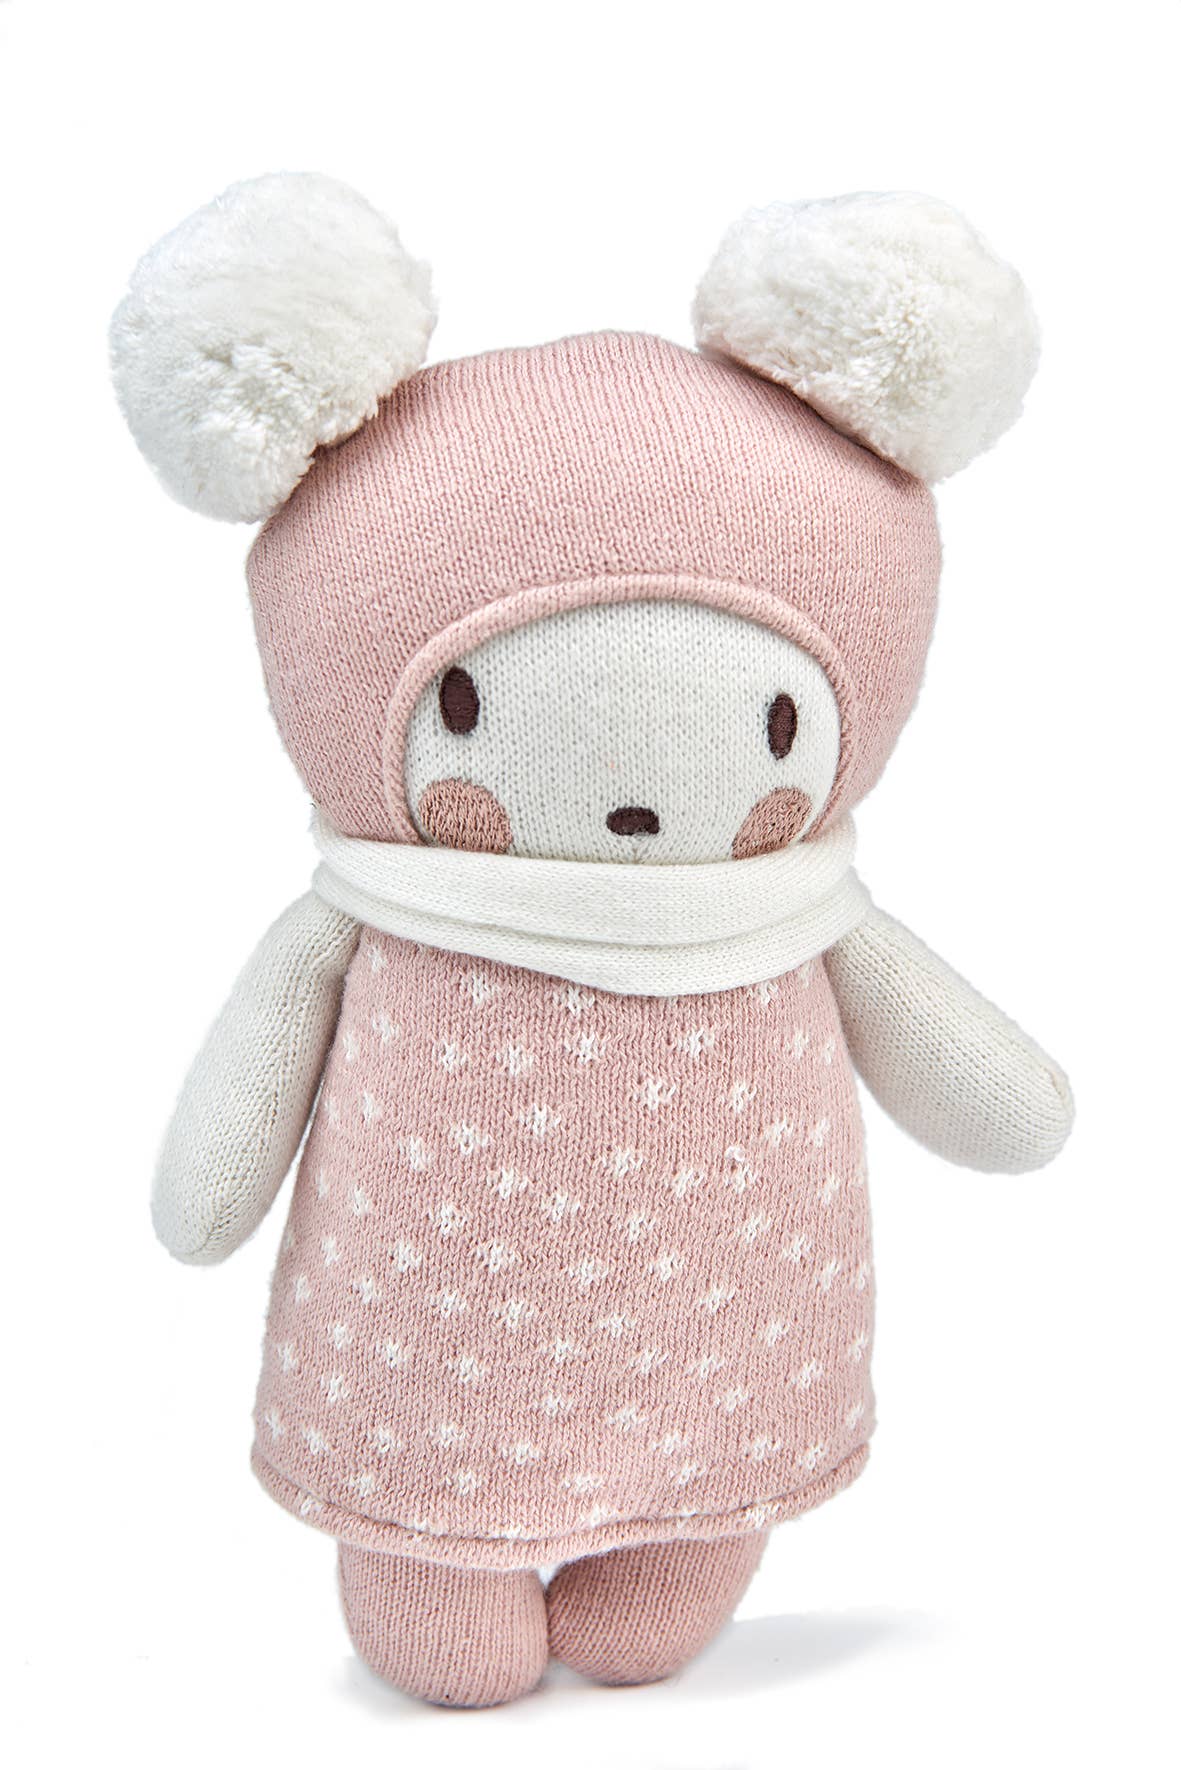 Baby Bella knitted doll in a gift box - TAYLOR + MAXThreadbear Design US